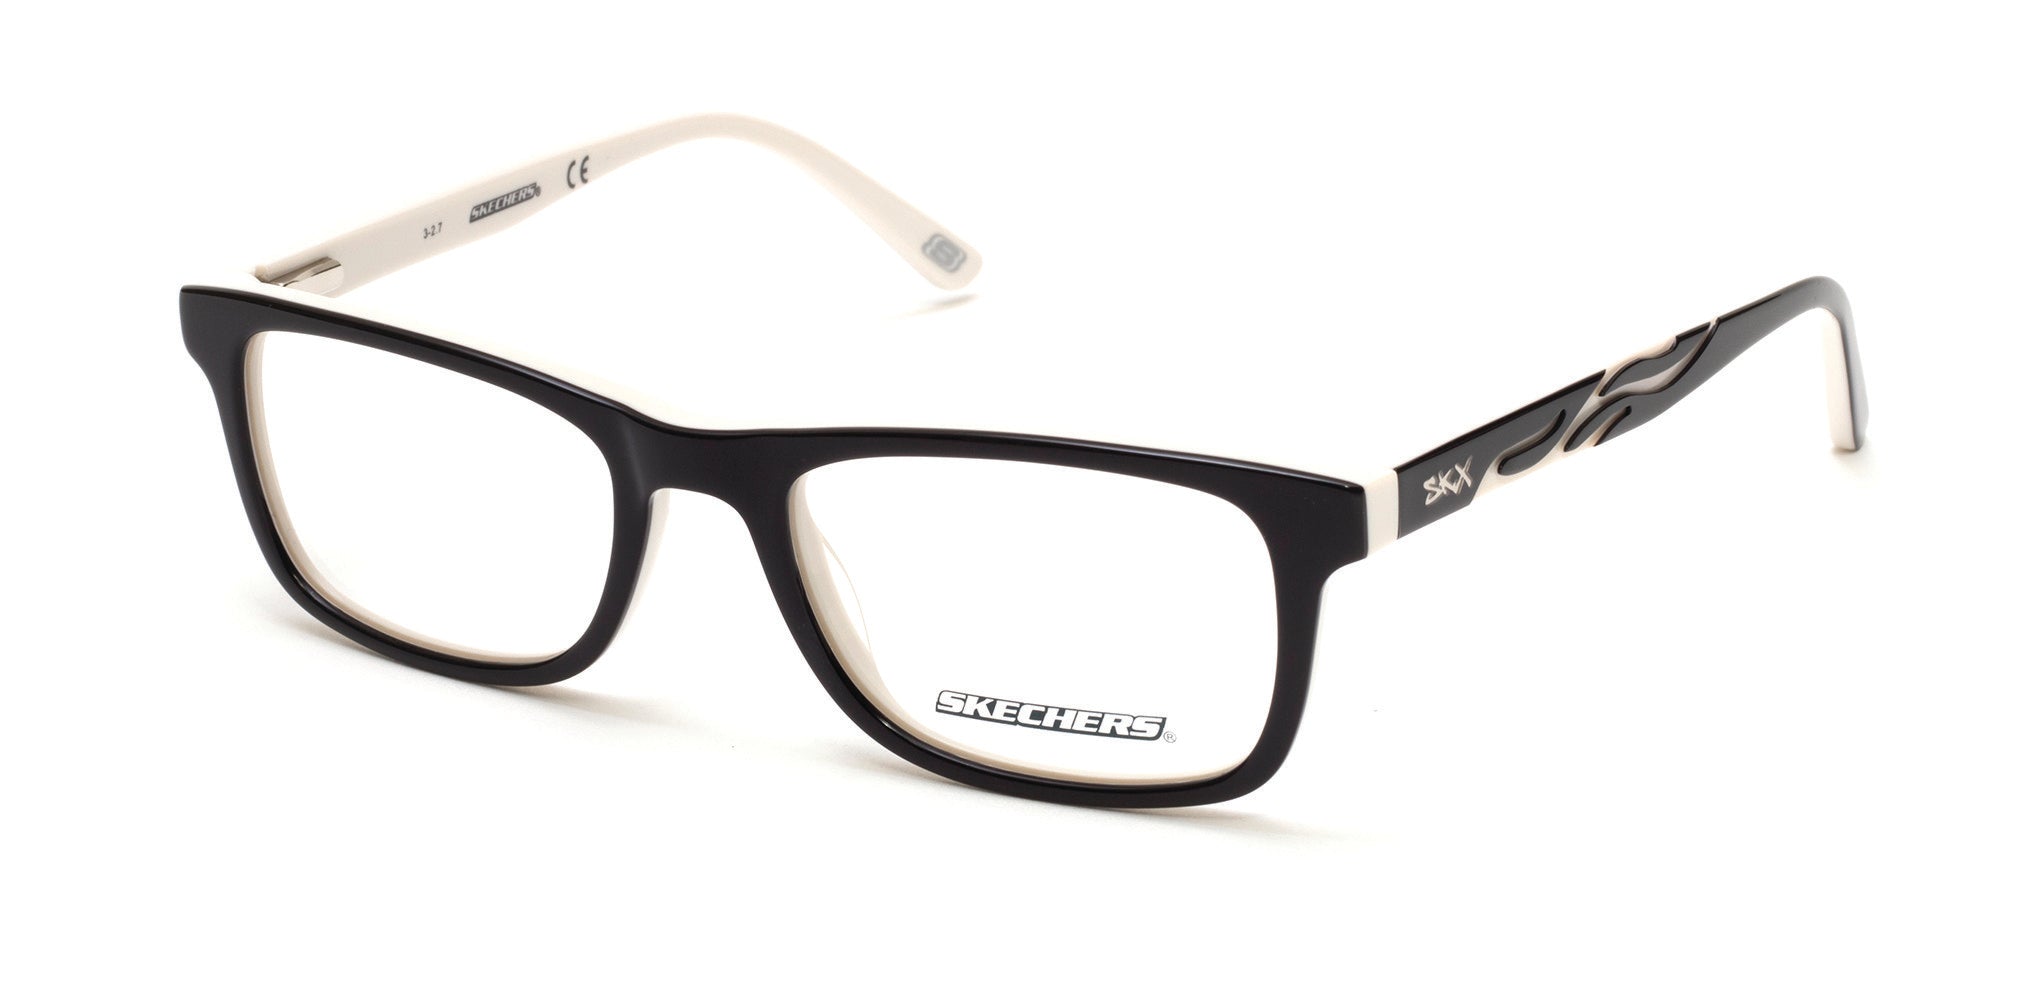 Skechers SE1152 Geometric Eyeglasses 001-001 - Shiny Black